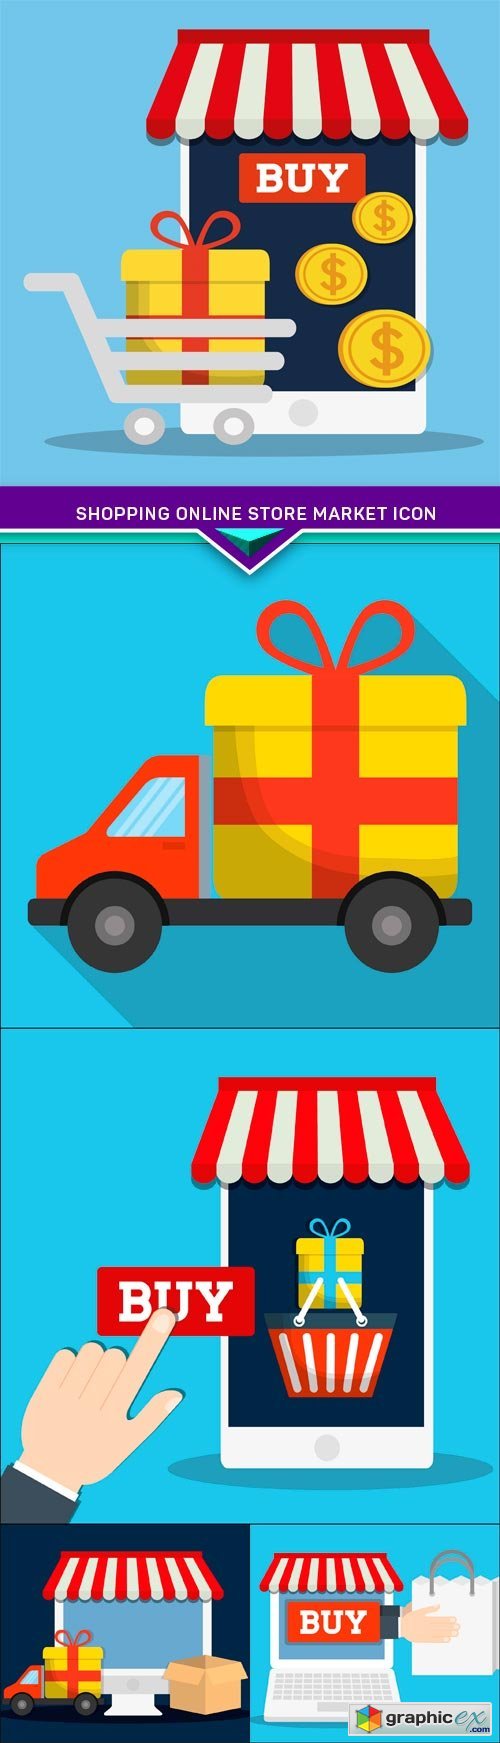 Shopping online store market icon 5X EPS